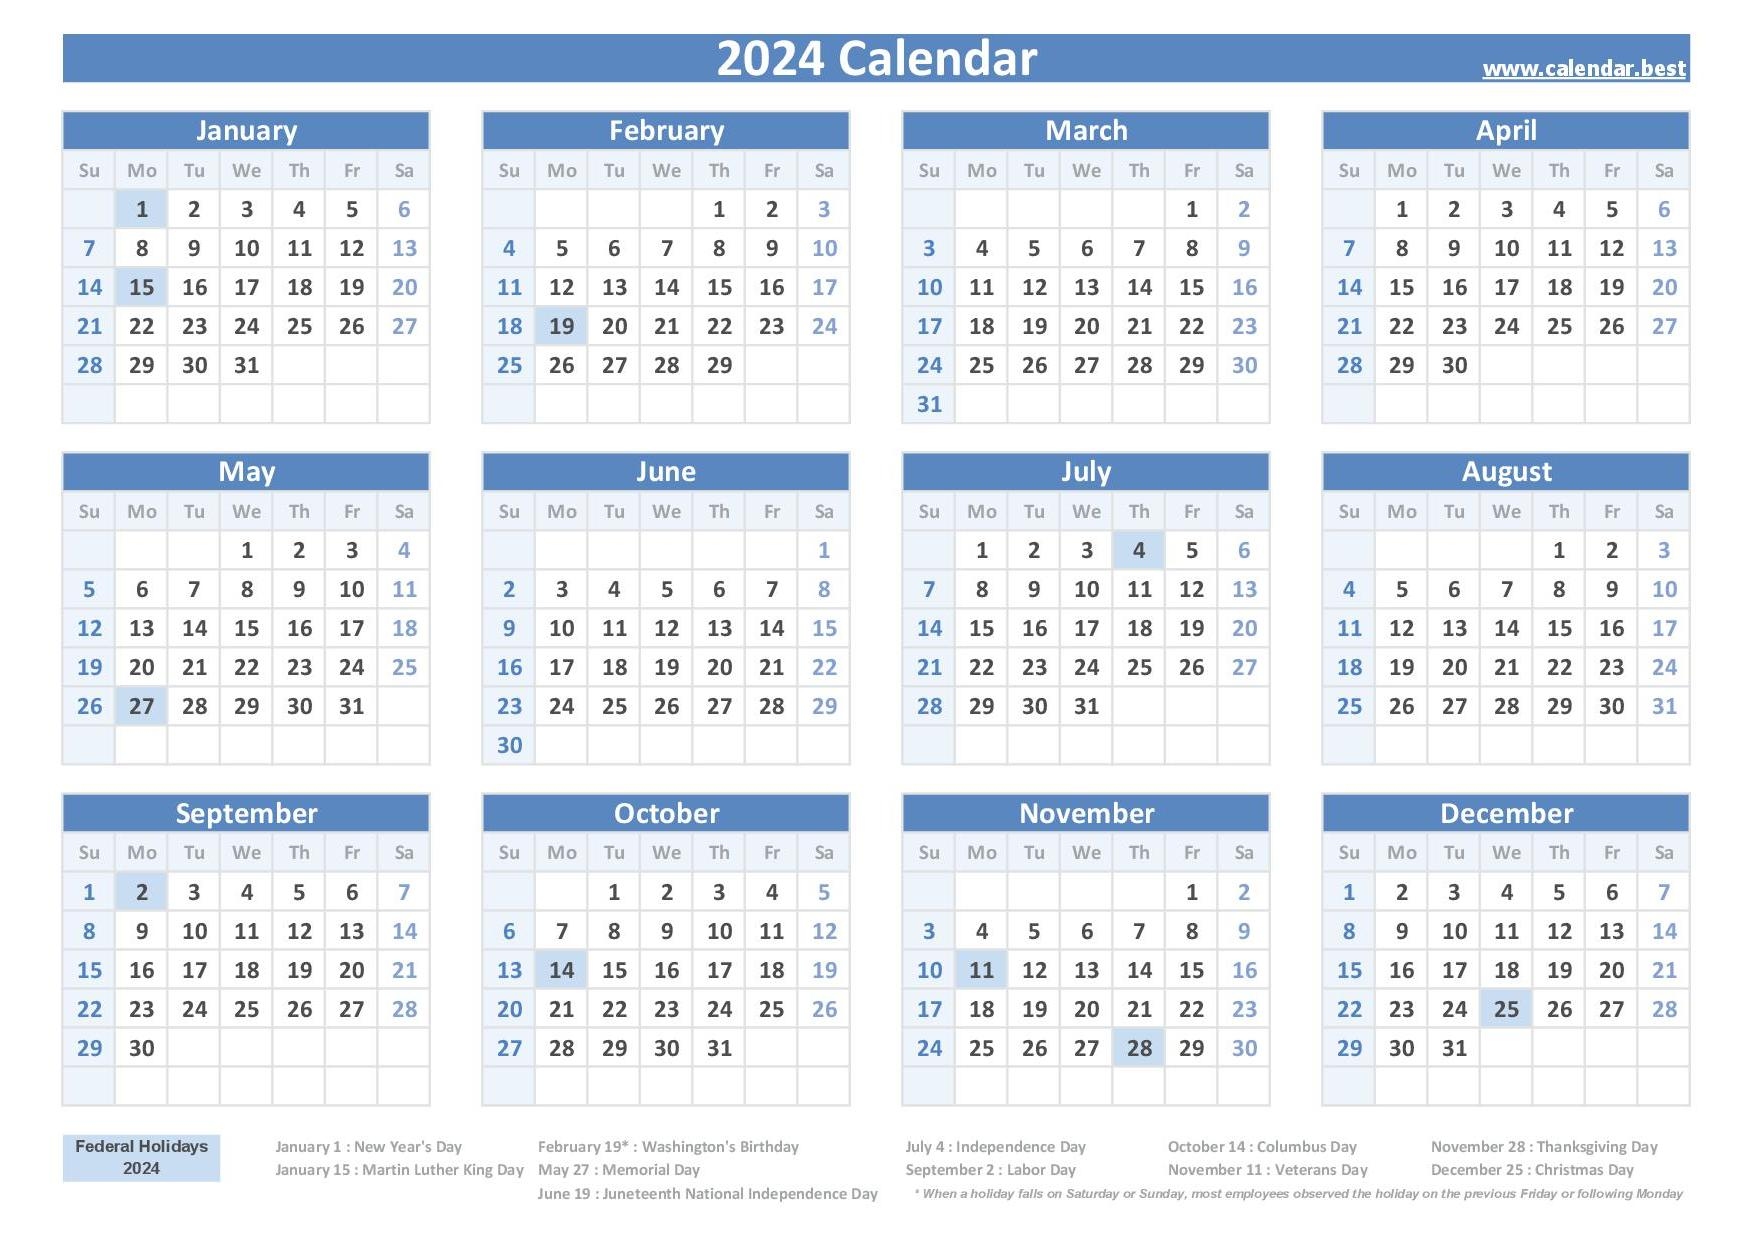 2024 Us Federal Holiday Calendar Printable Bill Marjie - Free Printable 2024 Calendar With Holidays And Pictures